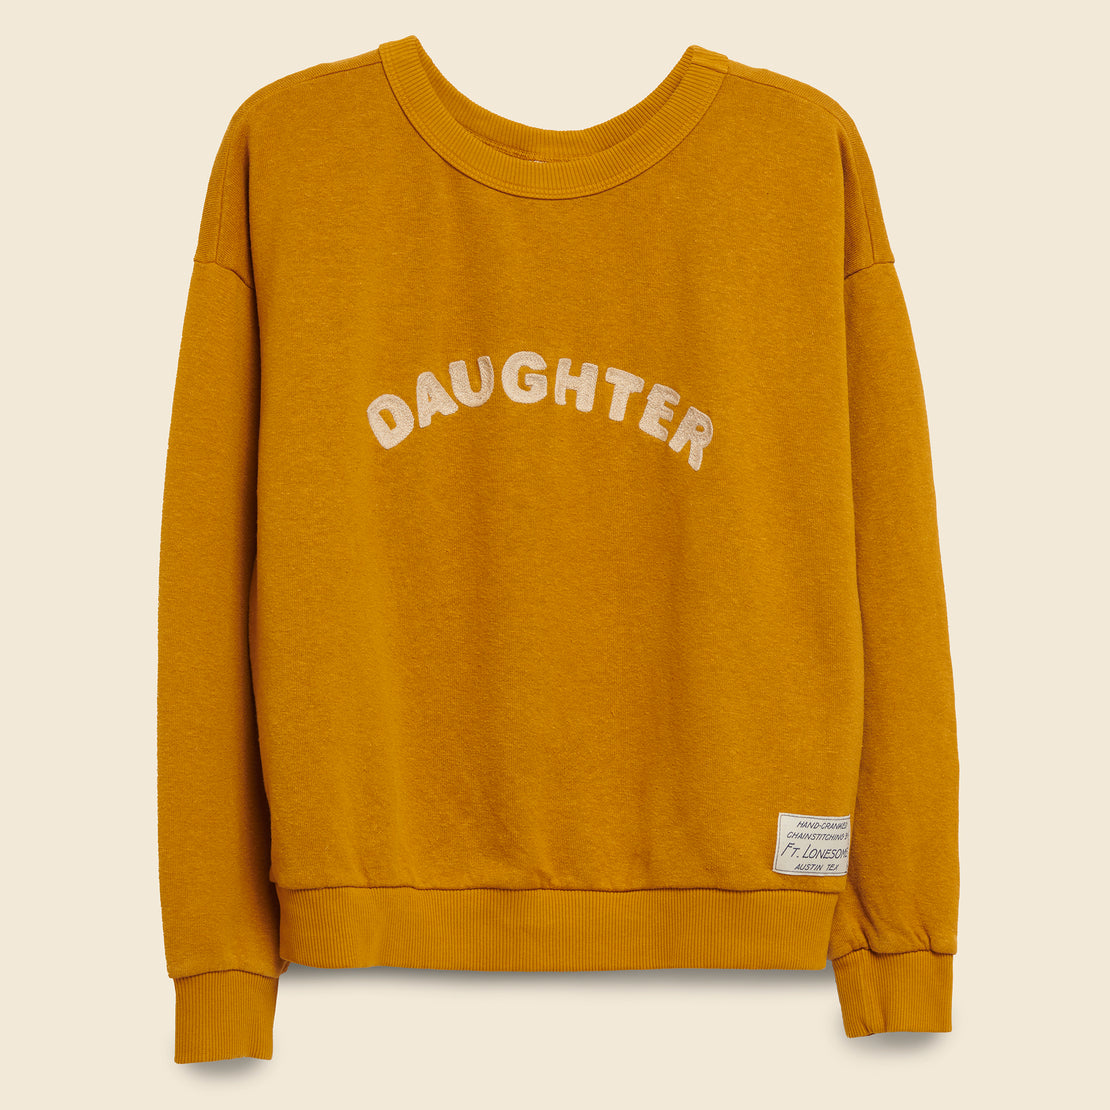 Fort Lonesome DAUGHTER Sweatshirt - Gold/Cream